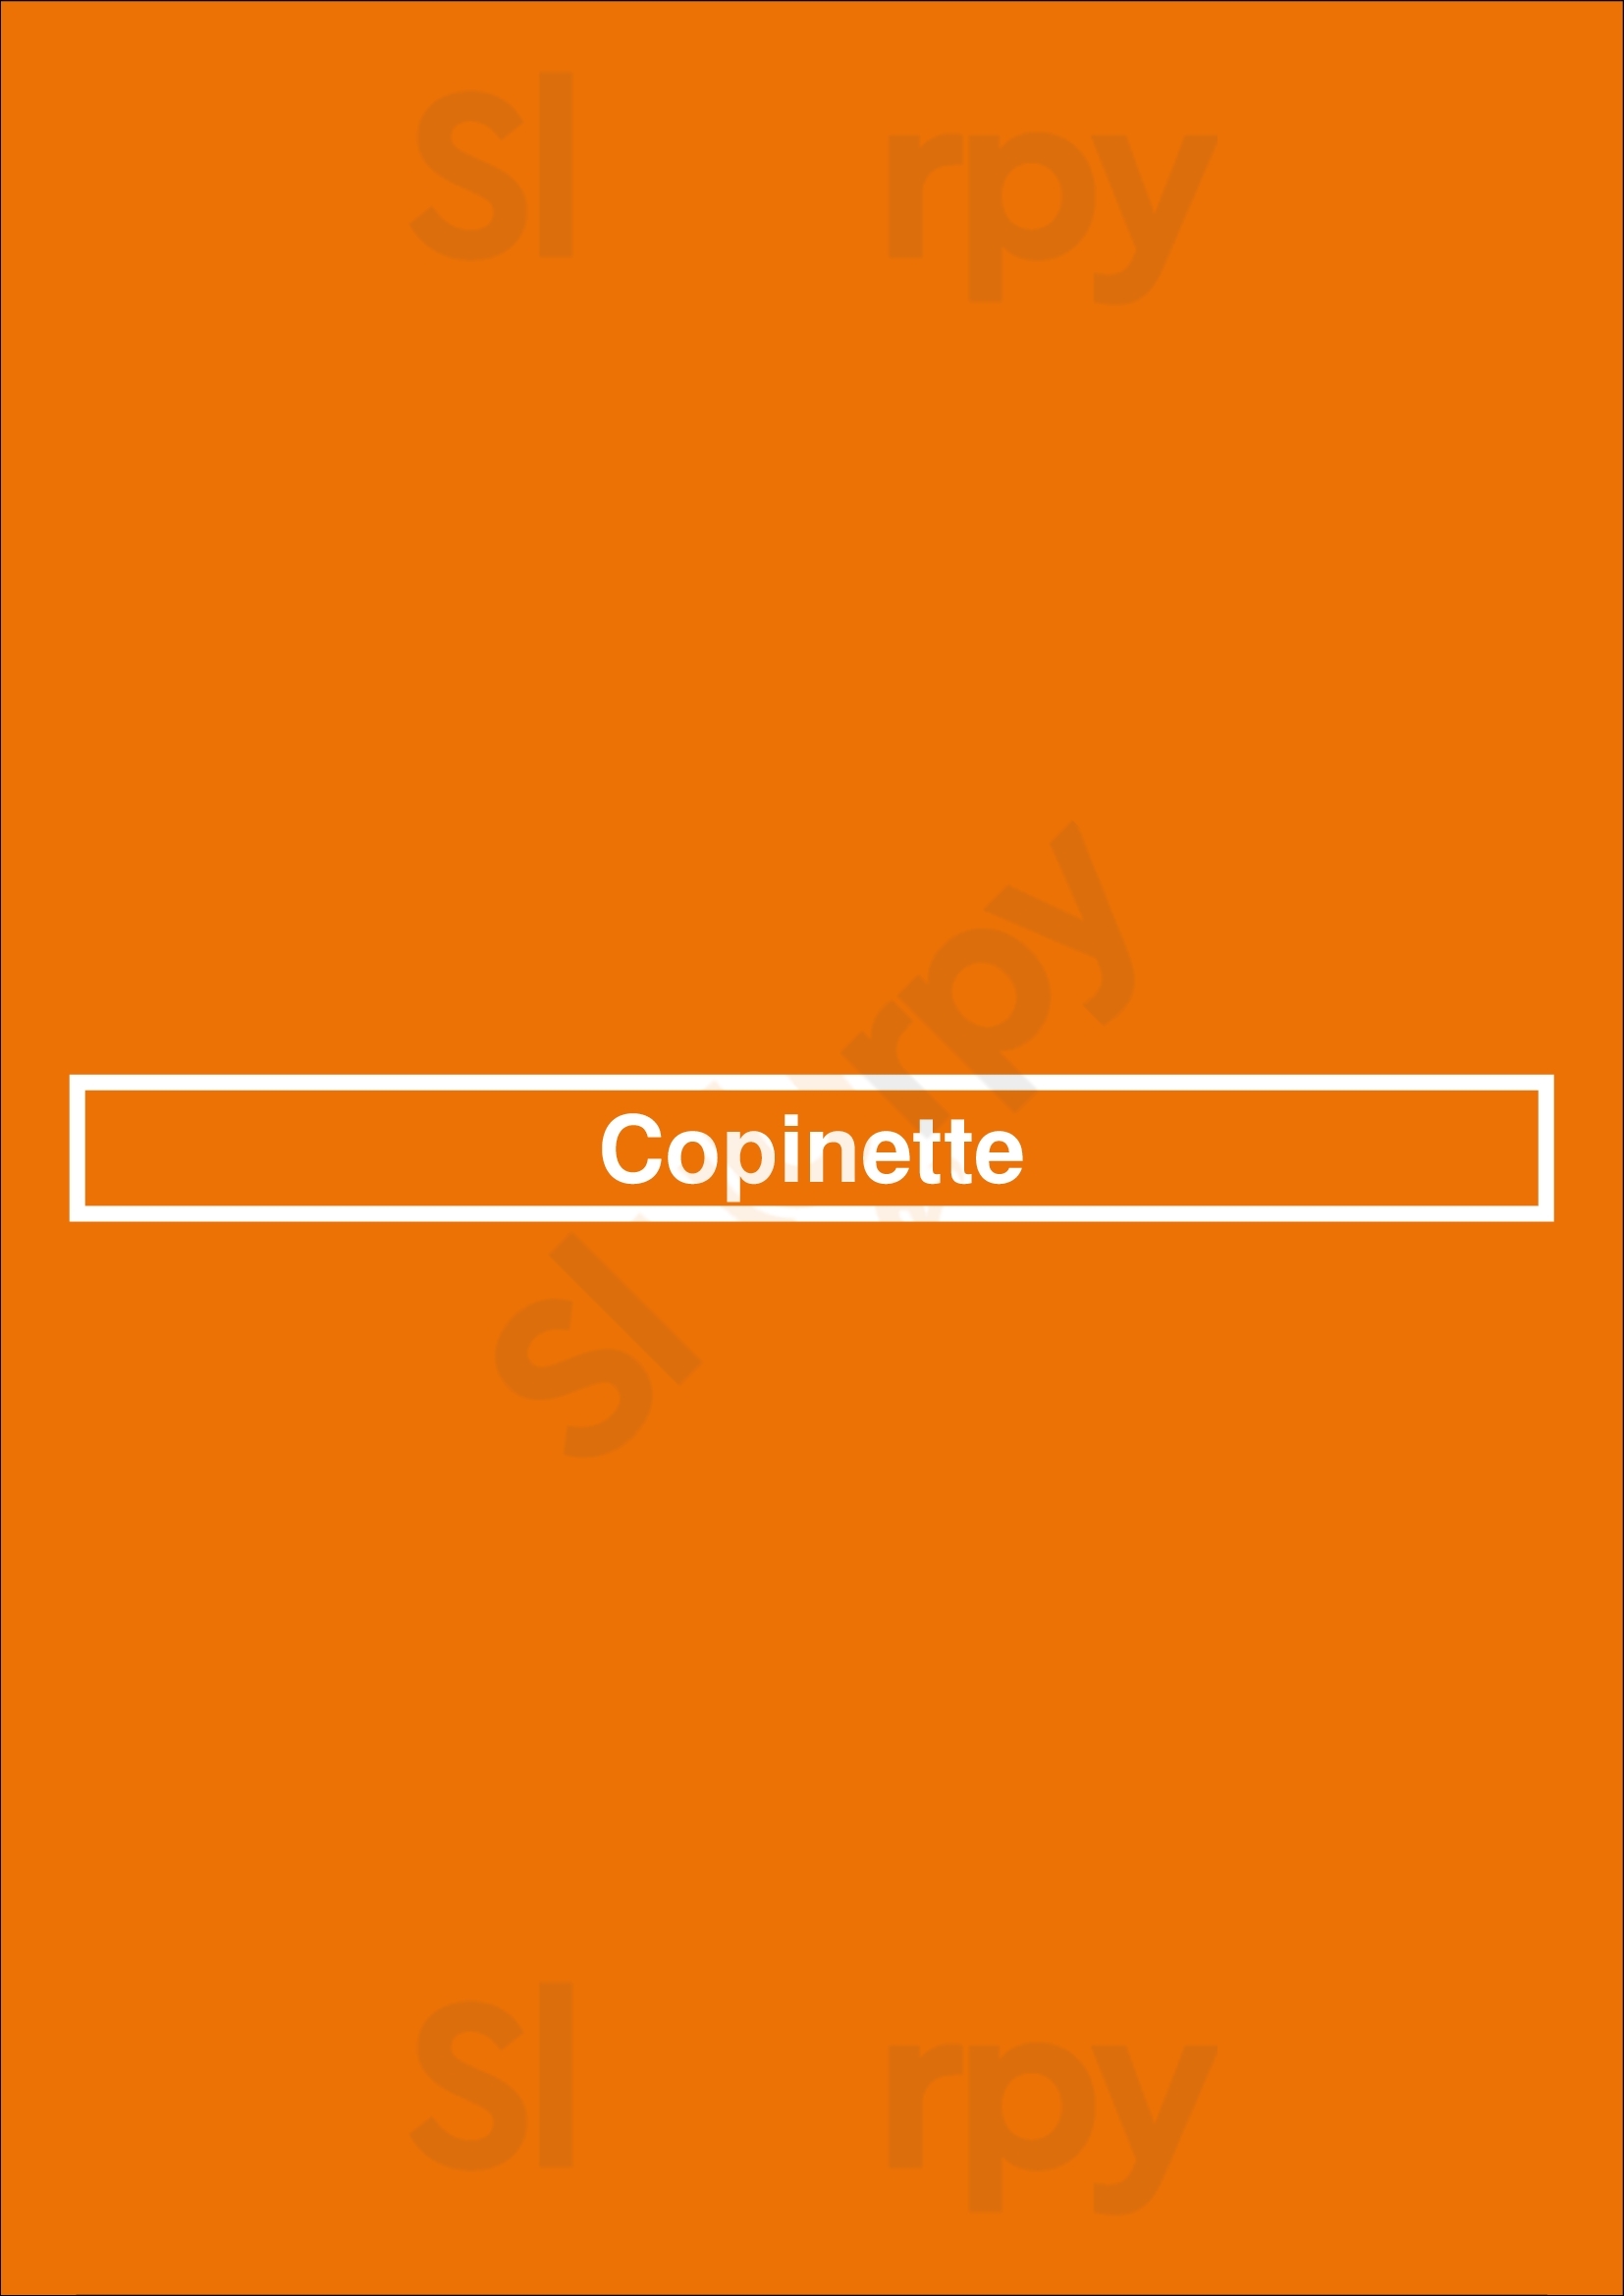 Copinette New York City Menu - 1